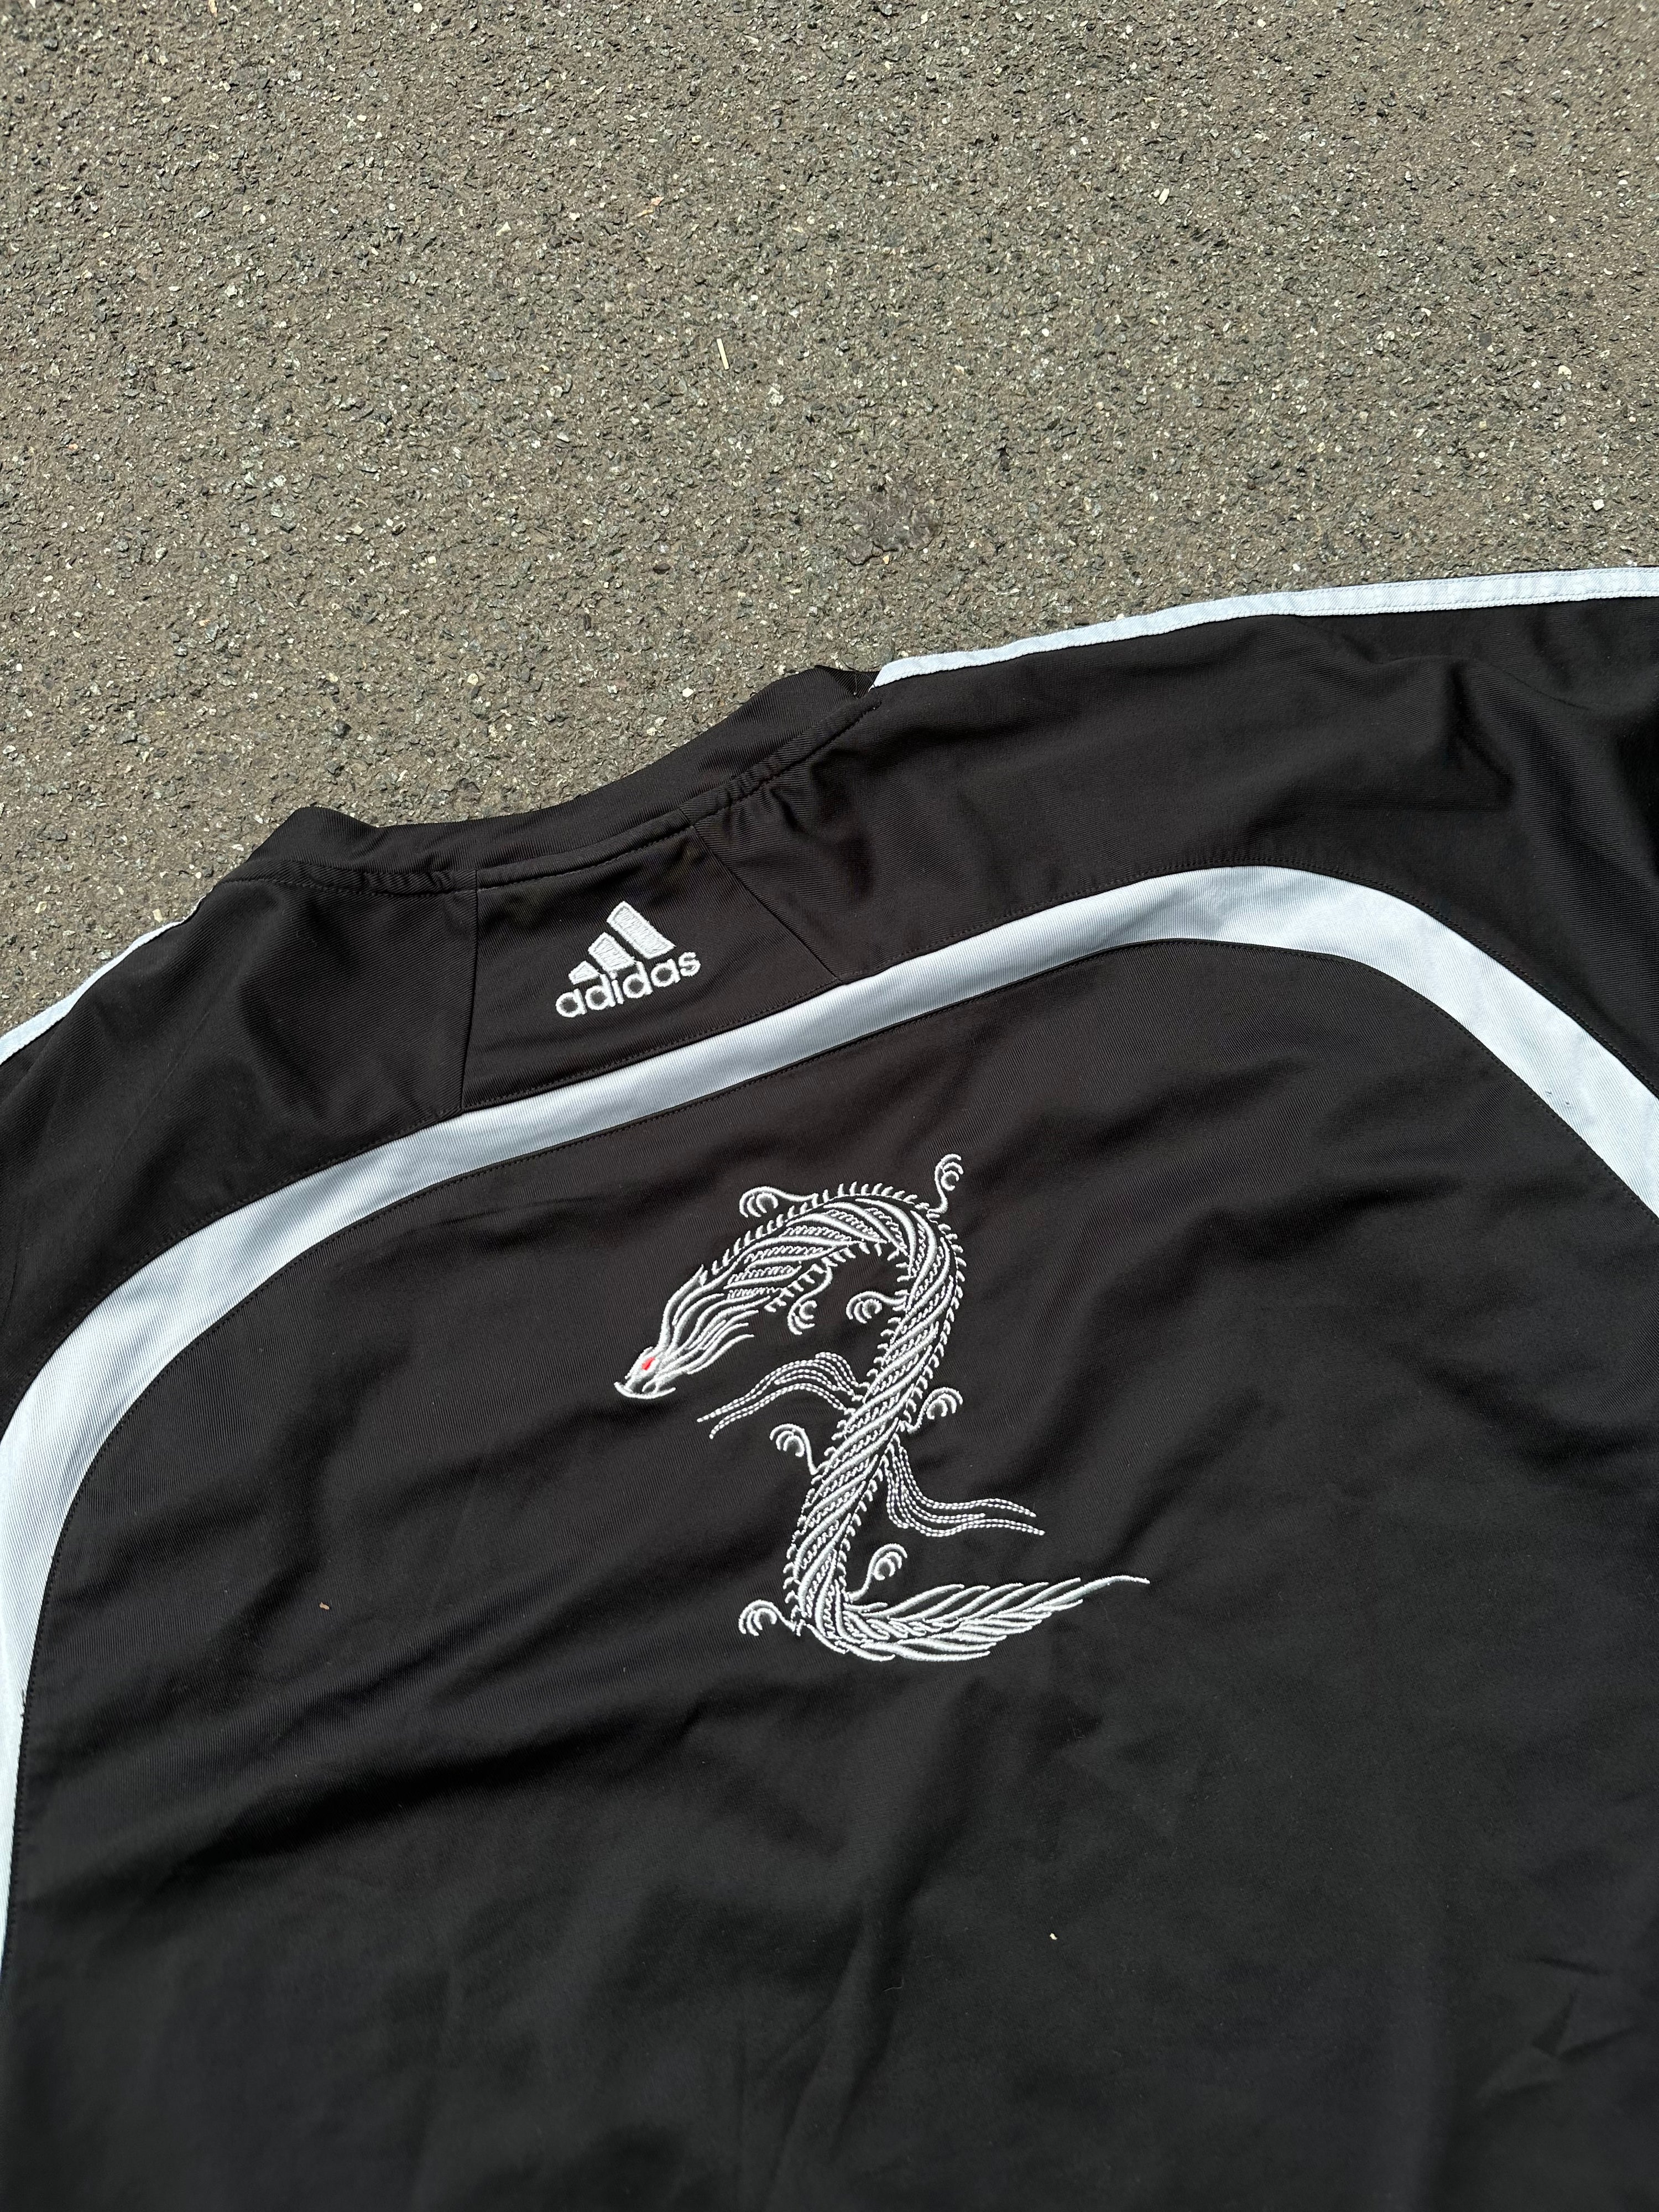 2000s Adidas Dragon Shirt (L)